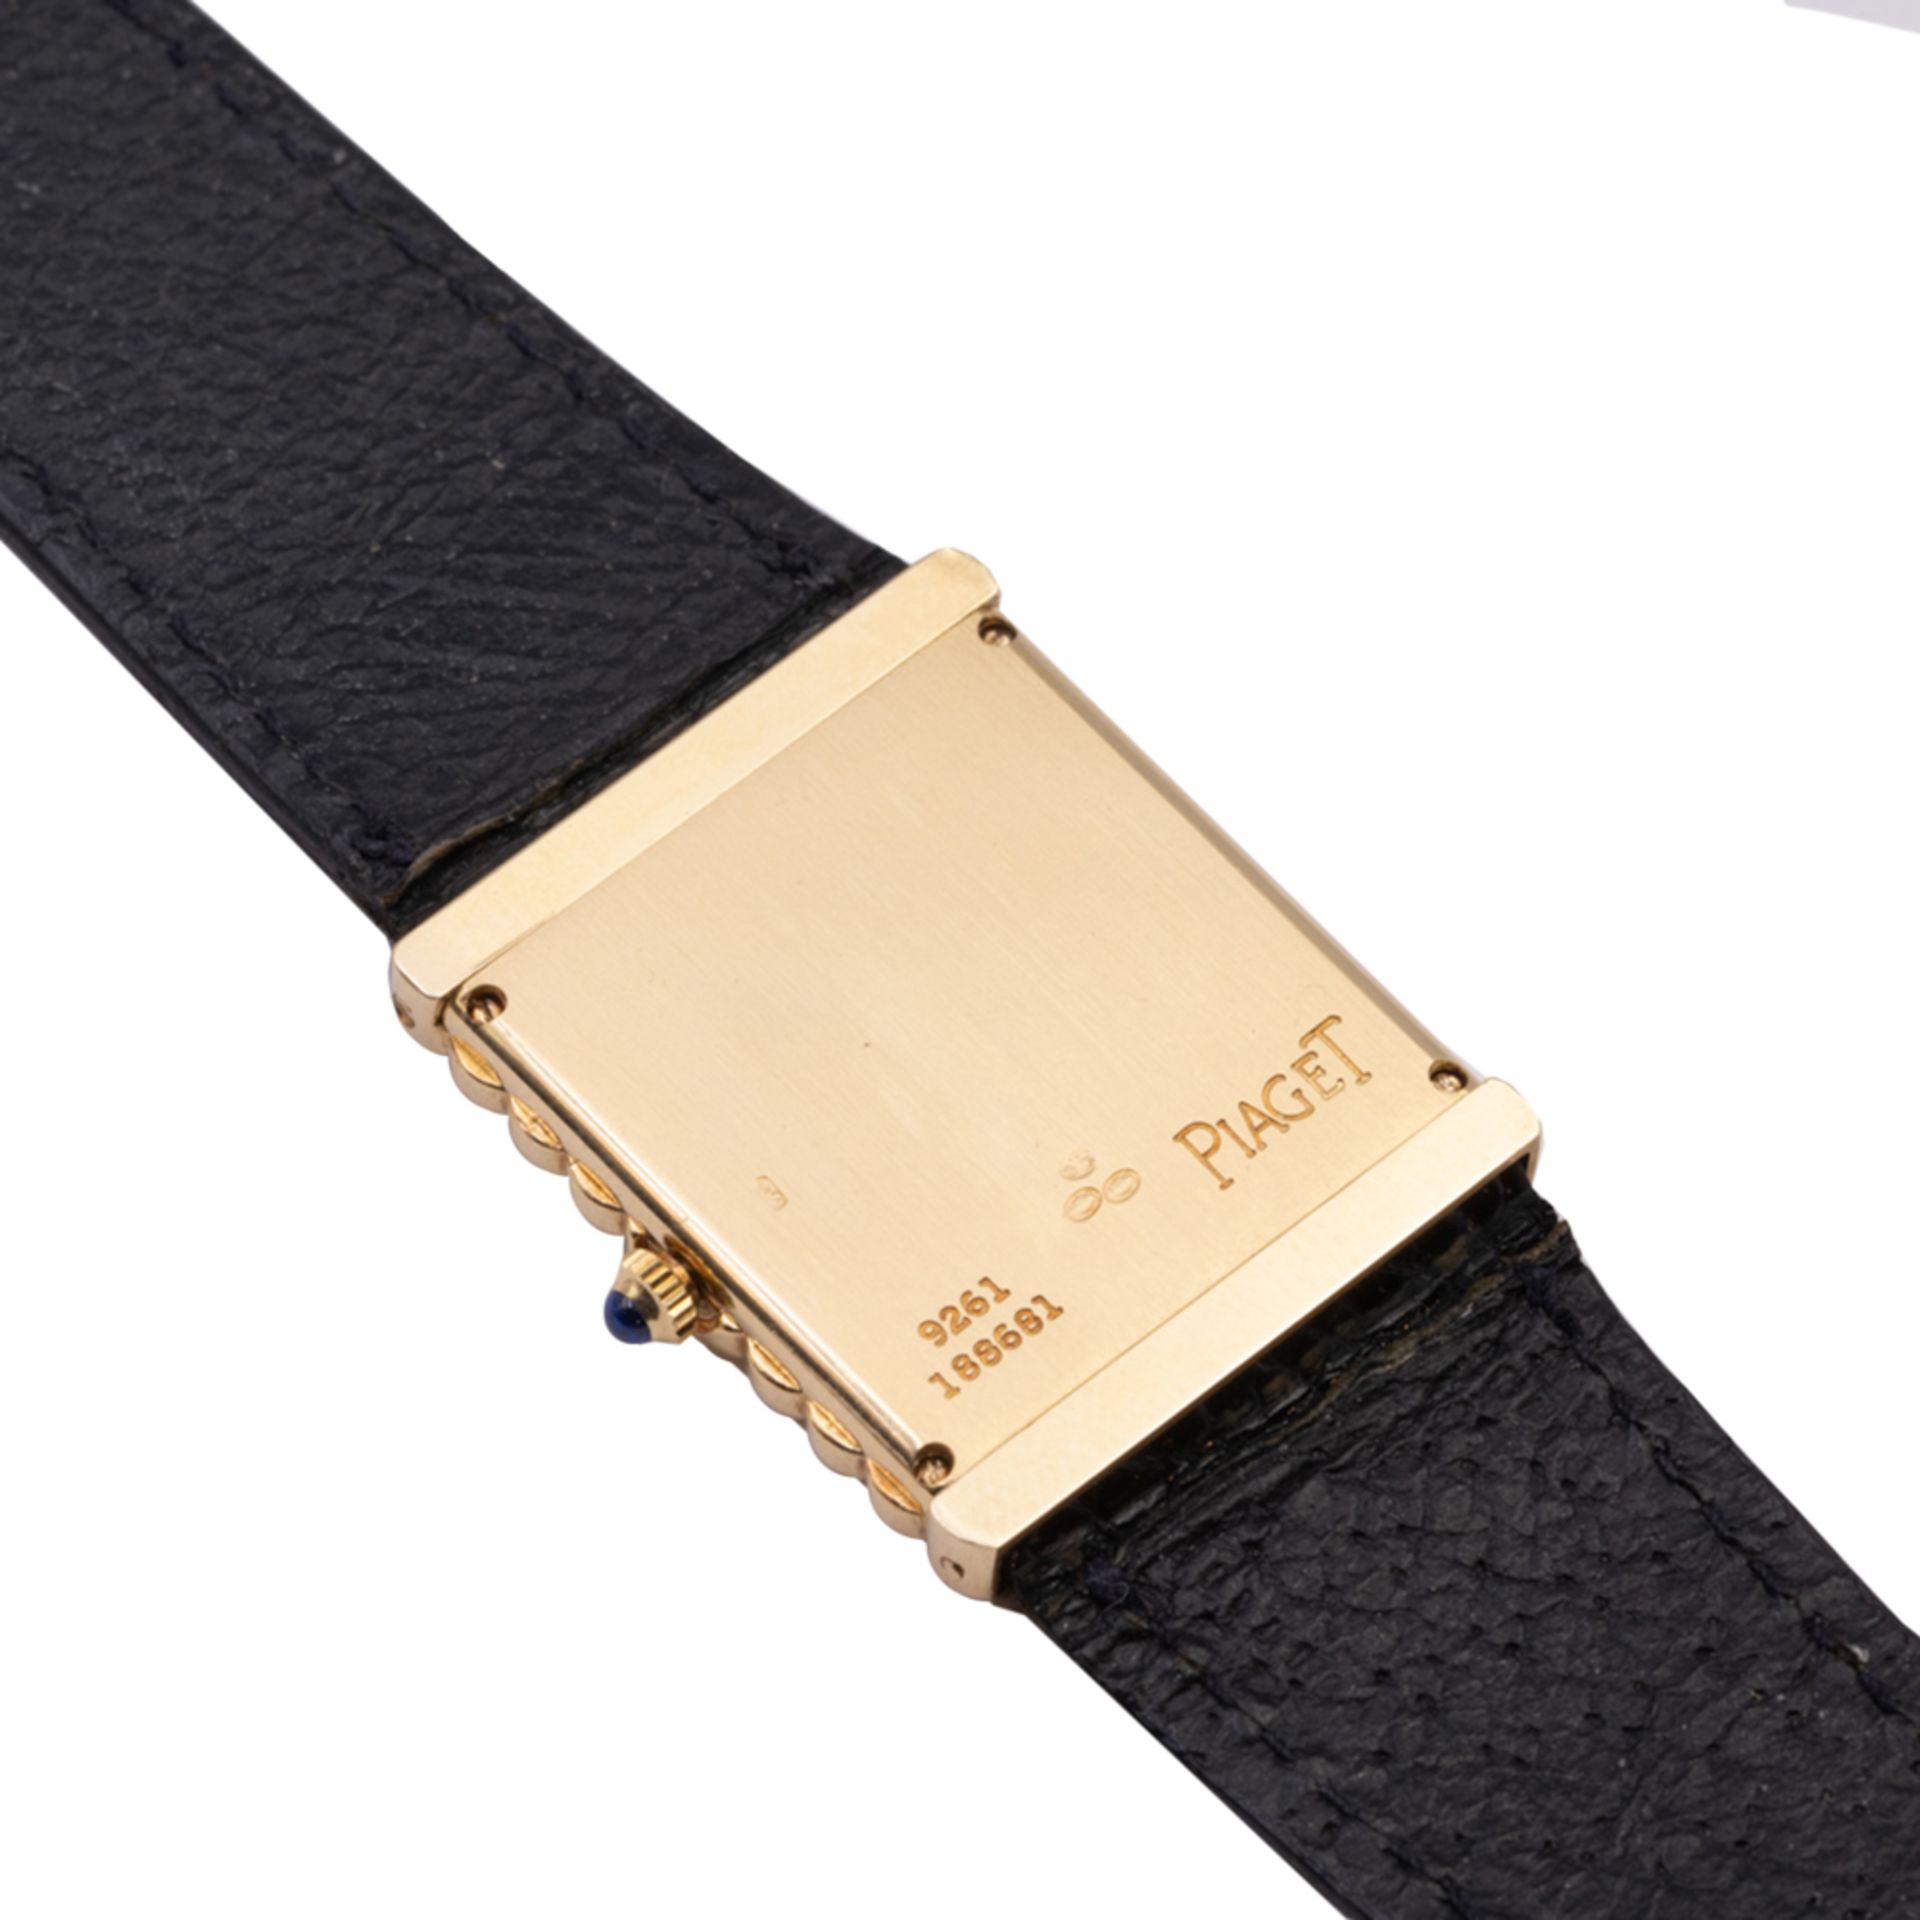 Piaget for Van Cleef & Arpels, vintage wristwatch - Image 2 of 2